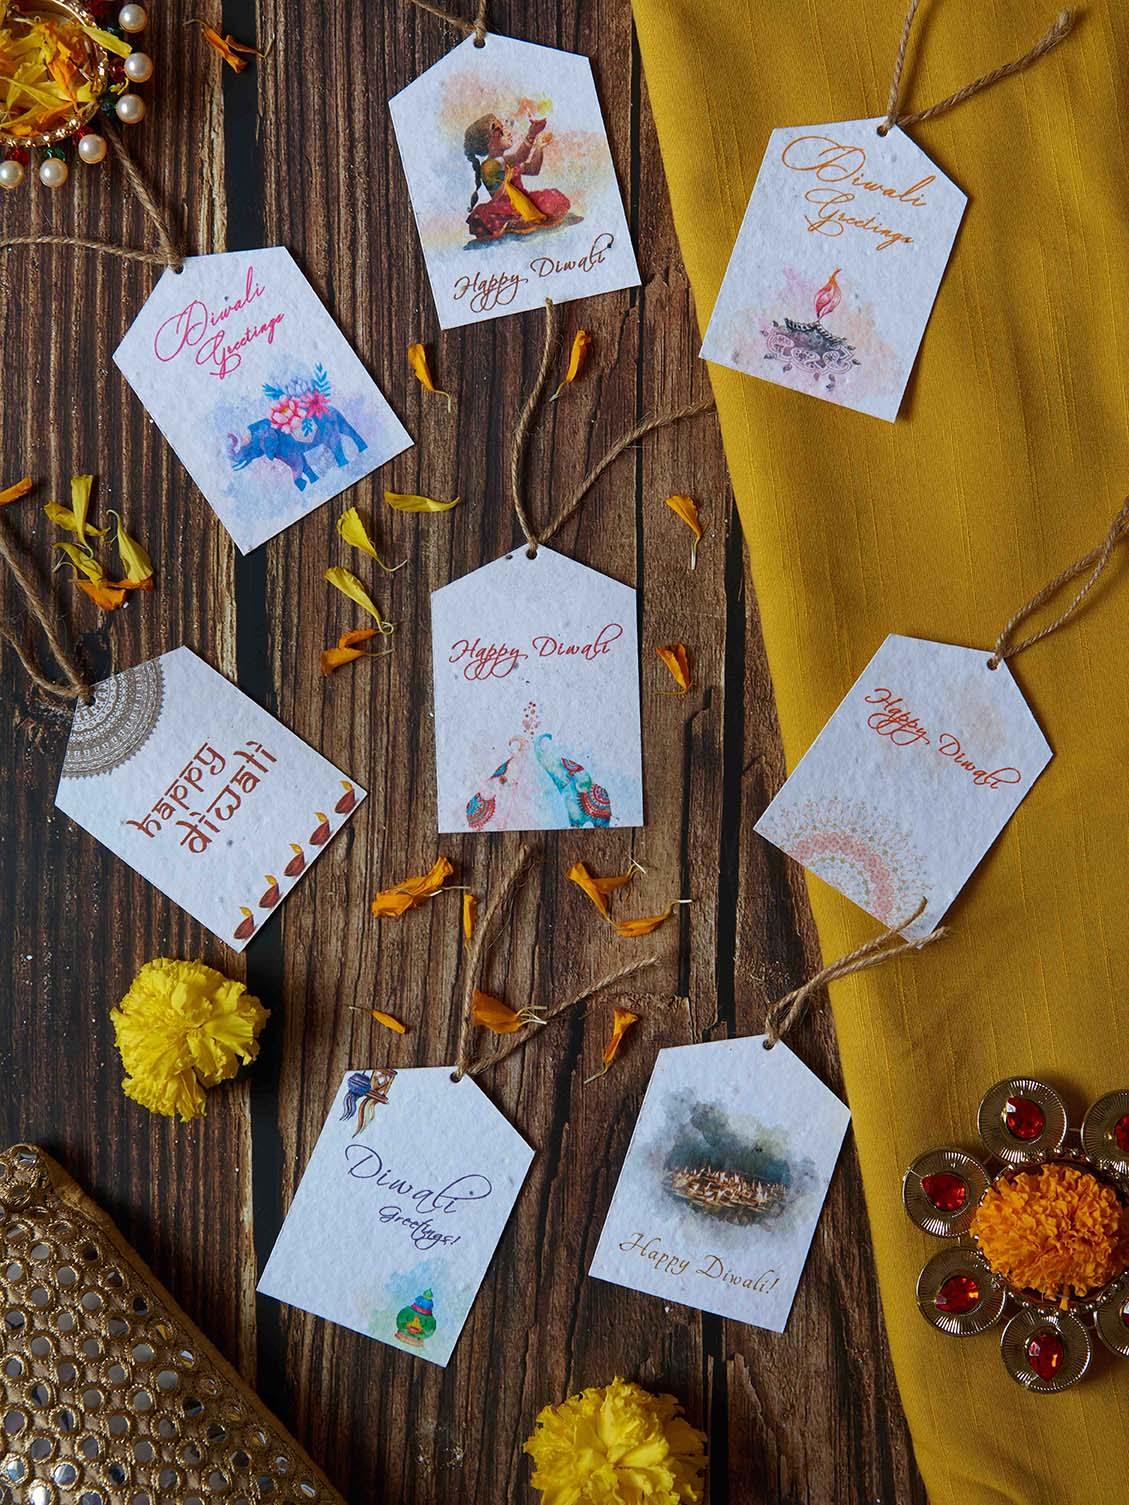  Eco-friendly Diwali gift tags with beautiful diwali greetings